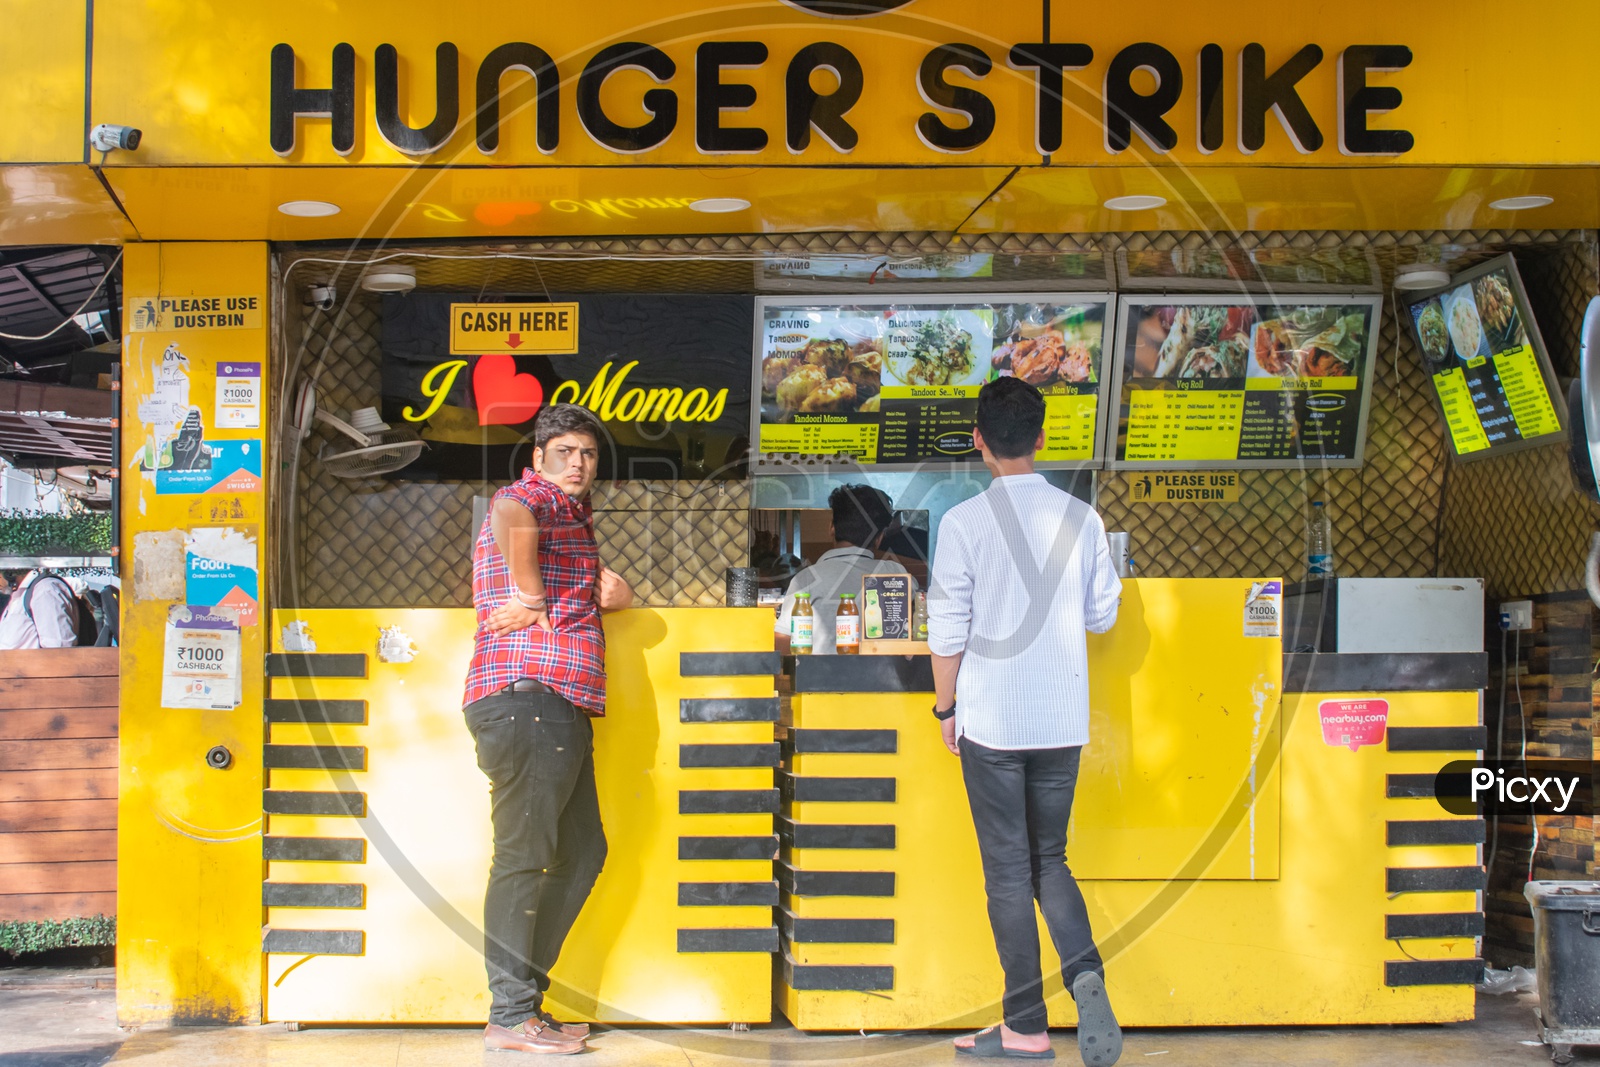 Hunger strike restaurant famous for delicious momos in Delhi